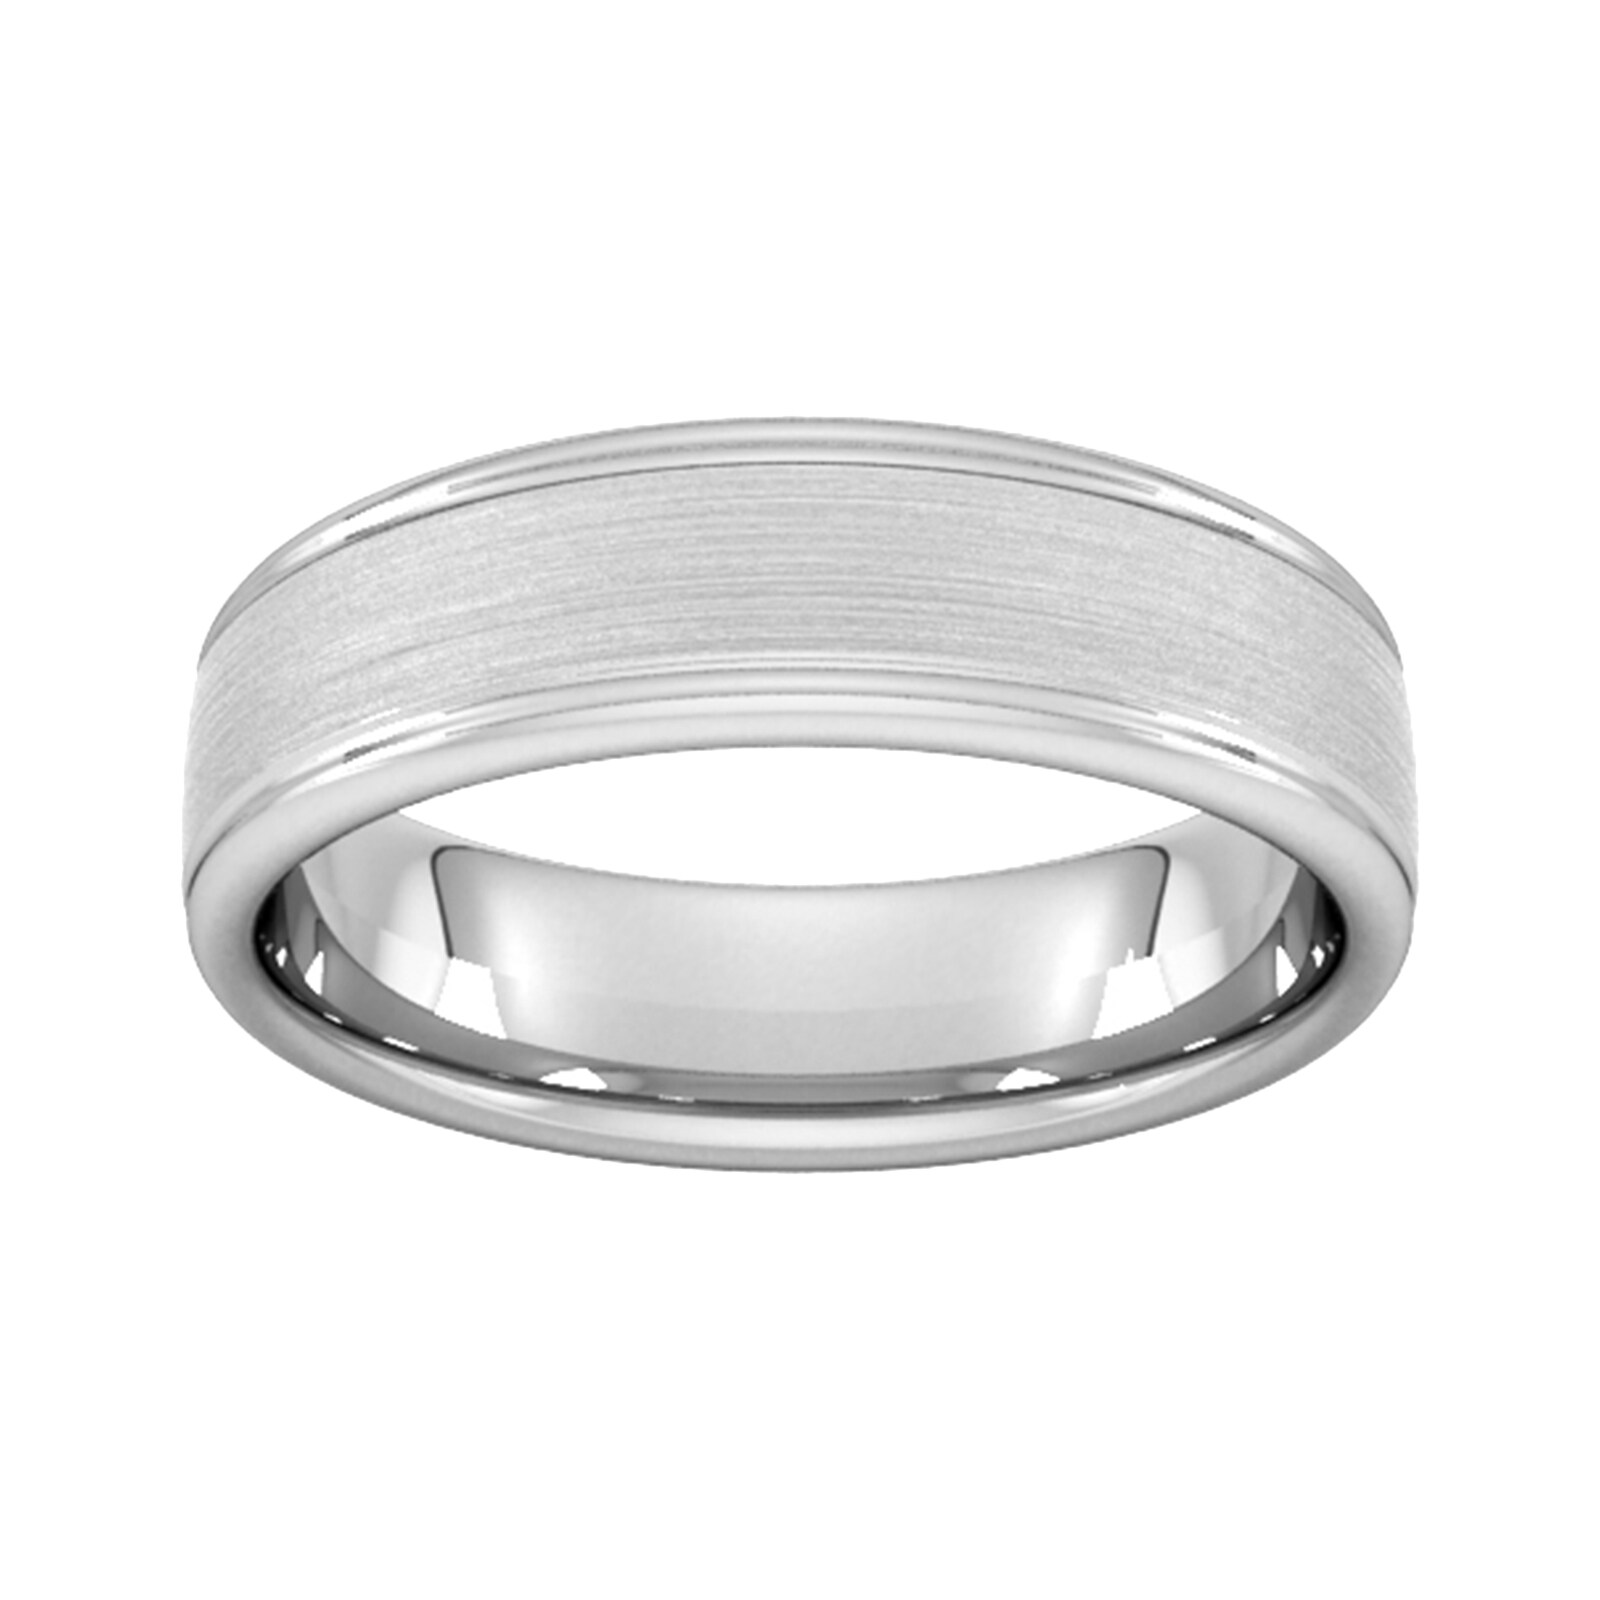 6mm Slight Court Standard Matt Centre With Grooves Wedding Ring In 950 Palladium - Ring Size H